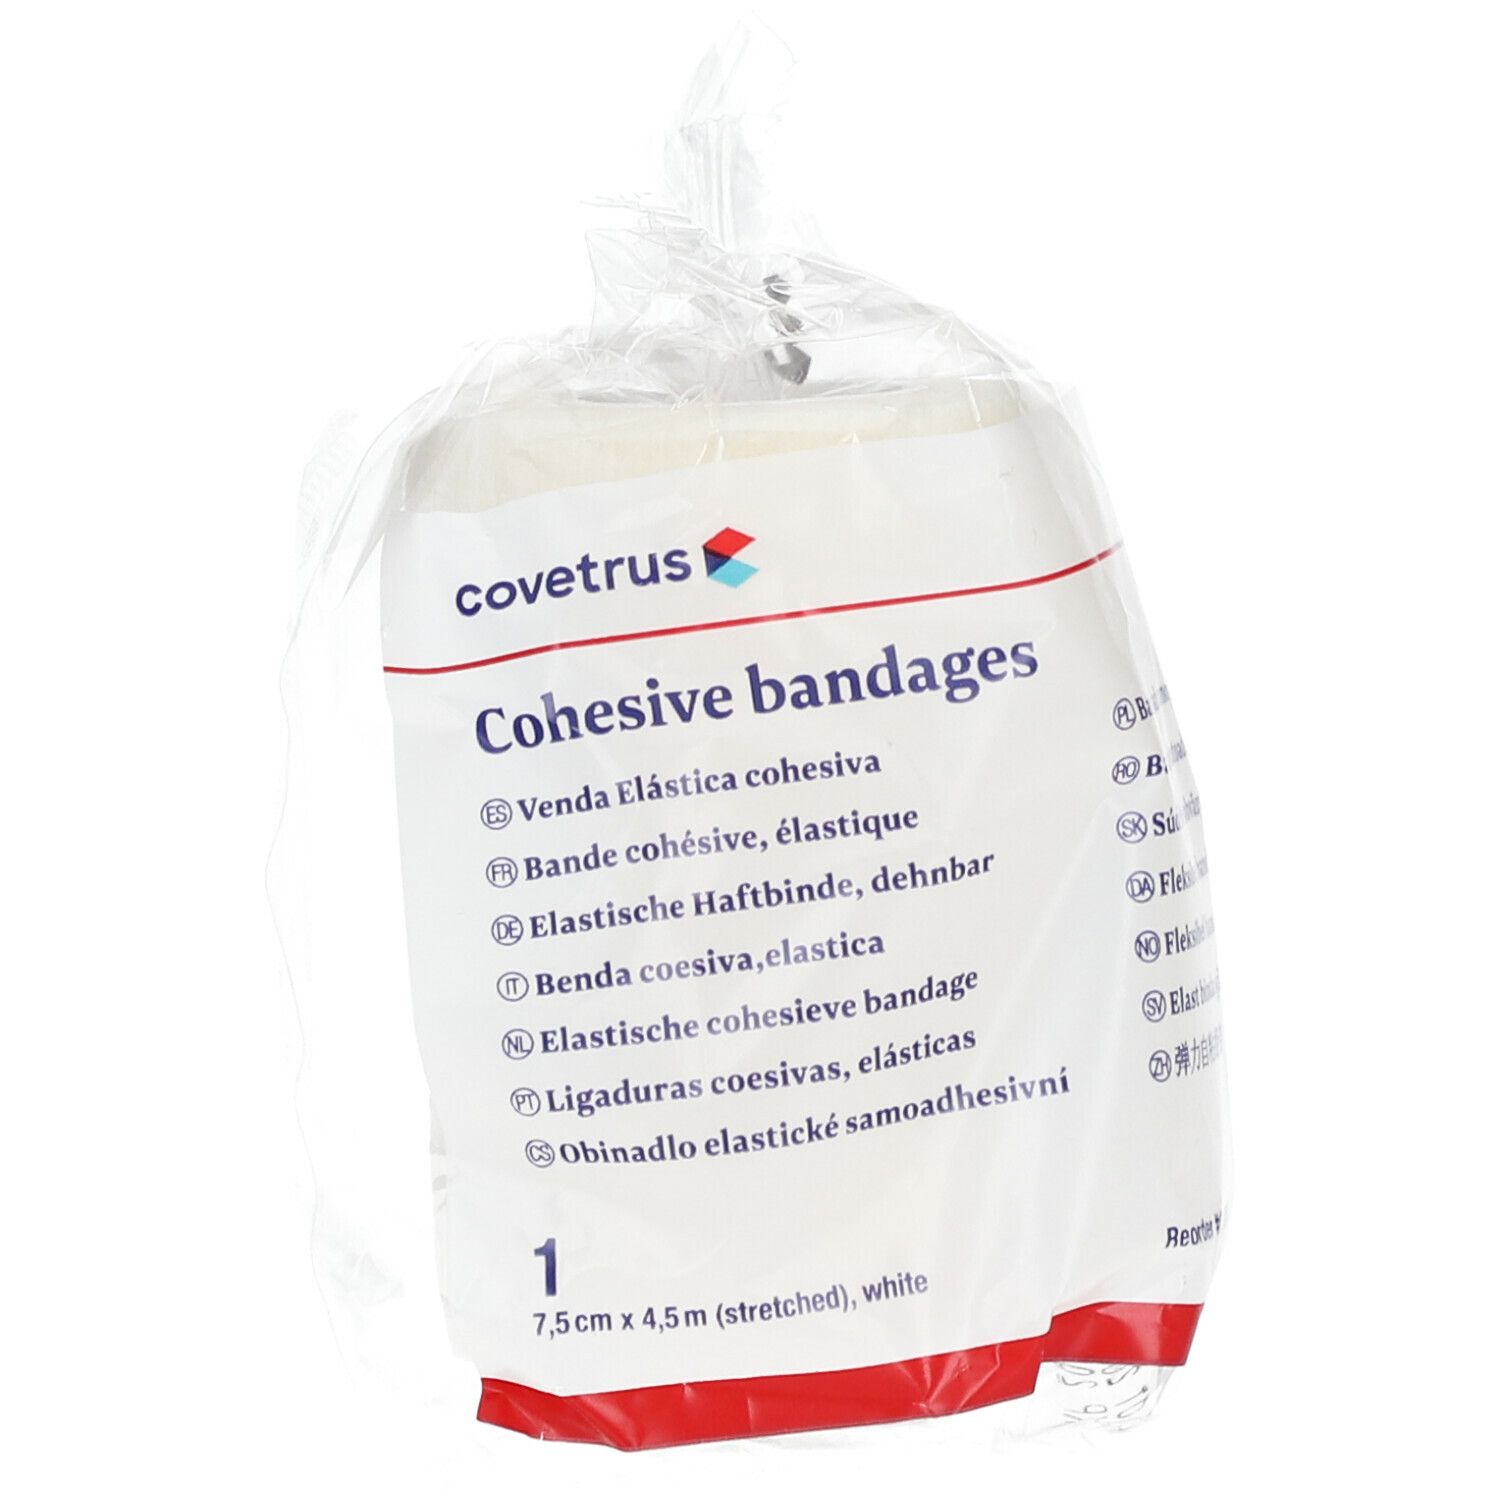 covetrus Cohesive bandages 7,5cm x 4,5m white